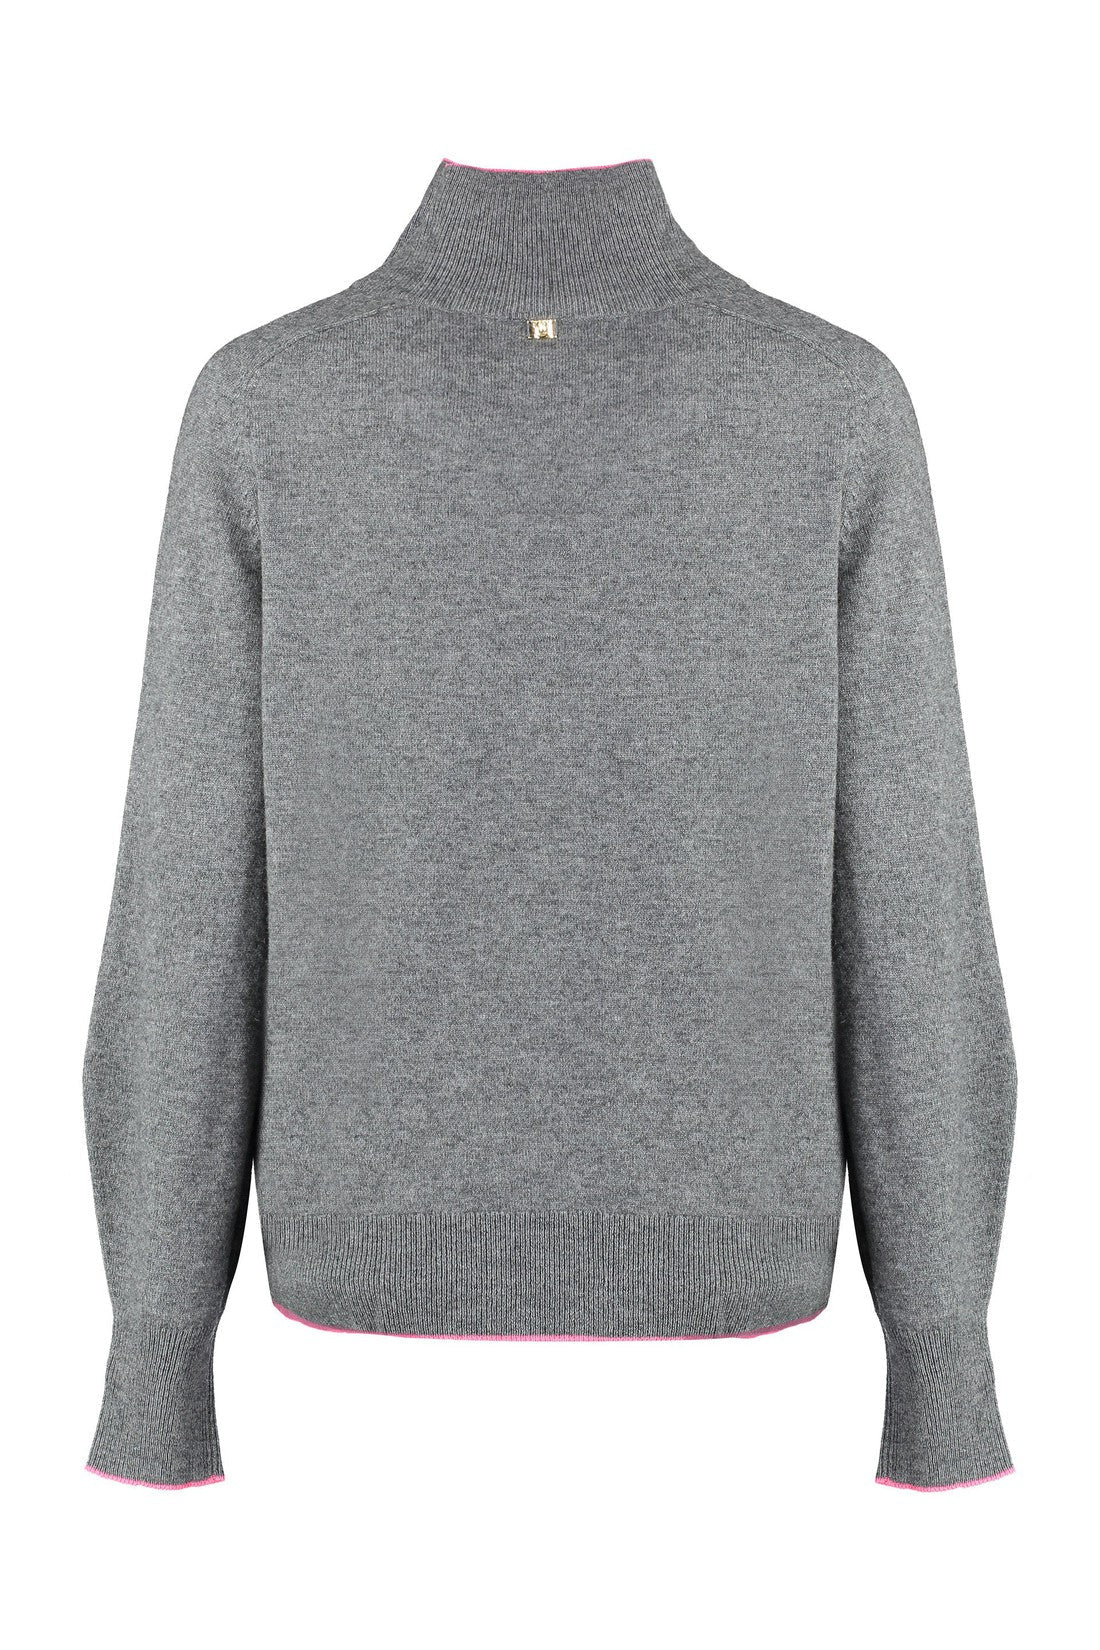 Pinko-OUTLET-SALE-Wool blend turtleneck sweater-ARCHIVIST